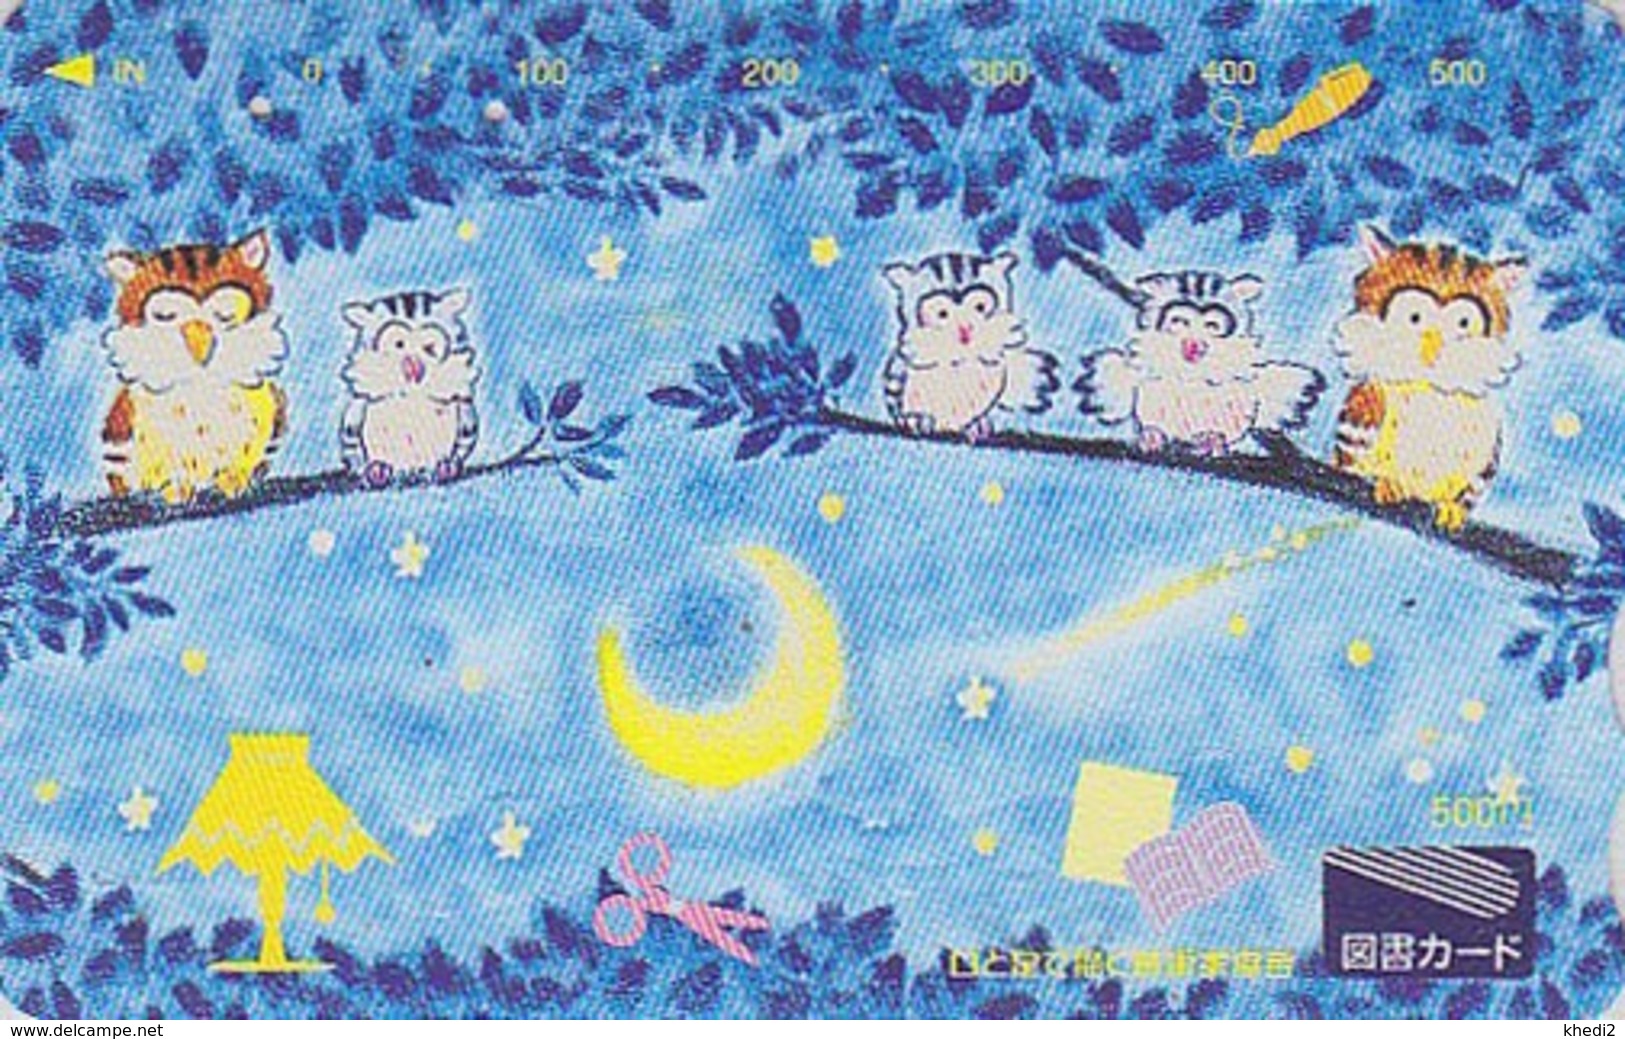 Carte Prépayée Japon - ANIMAL - OISEAU - HIBOU Chouette & Lune - OWL BIRD & Moon - Japan Prepaid Tosho Card - 4301 - Gufi E Civette